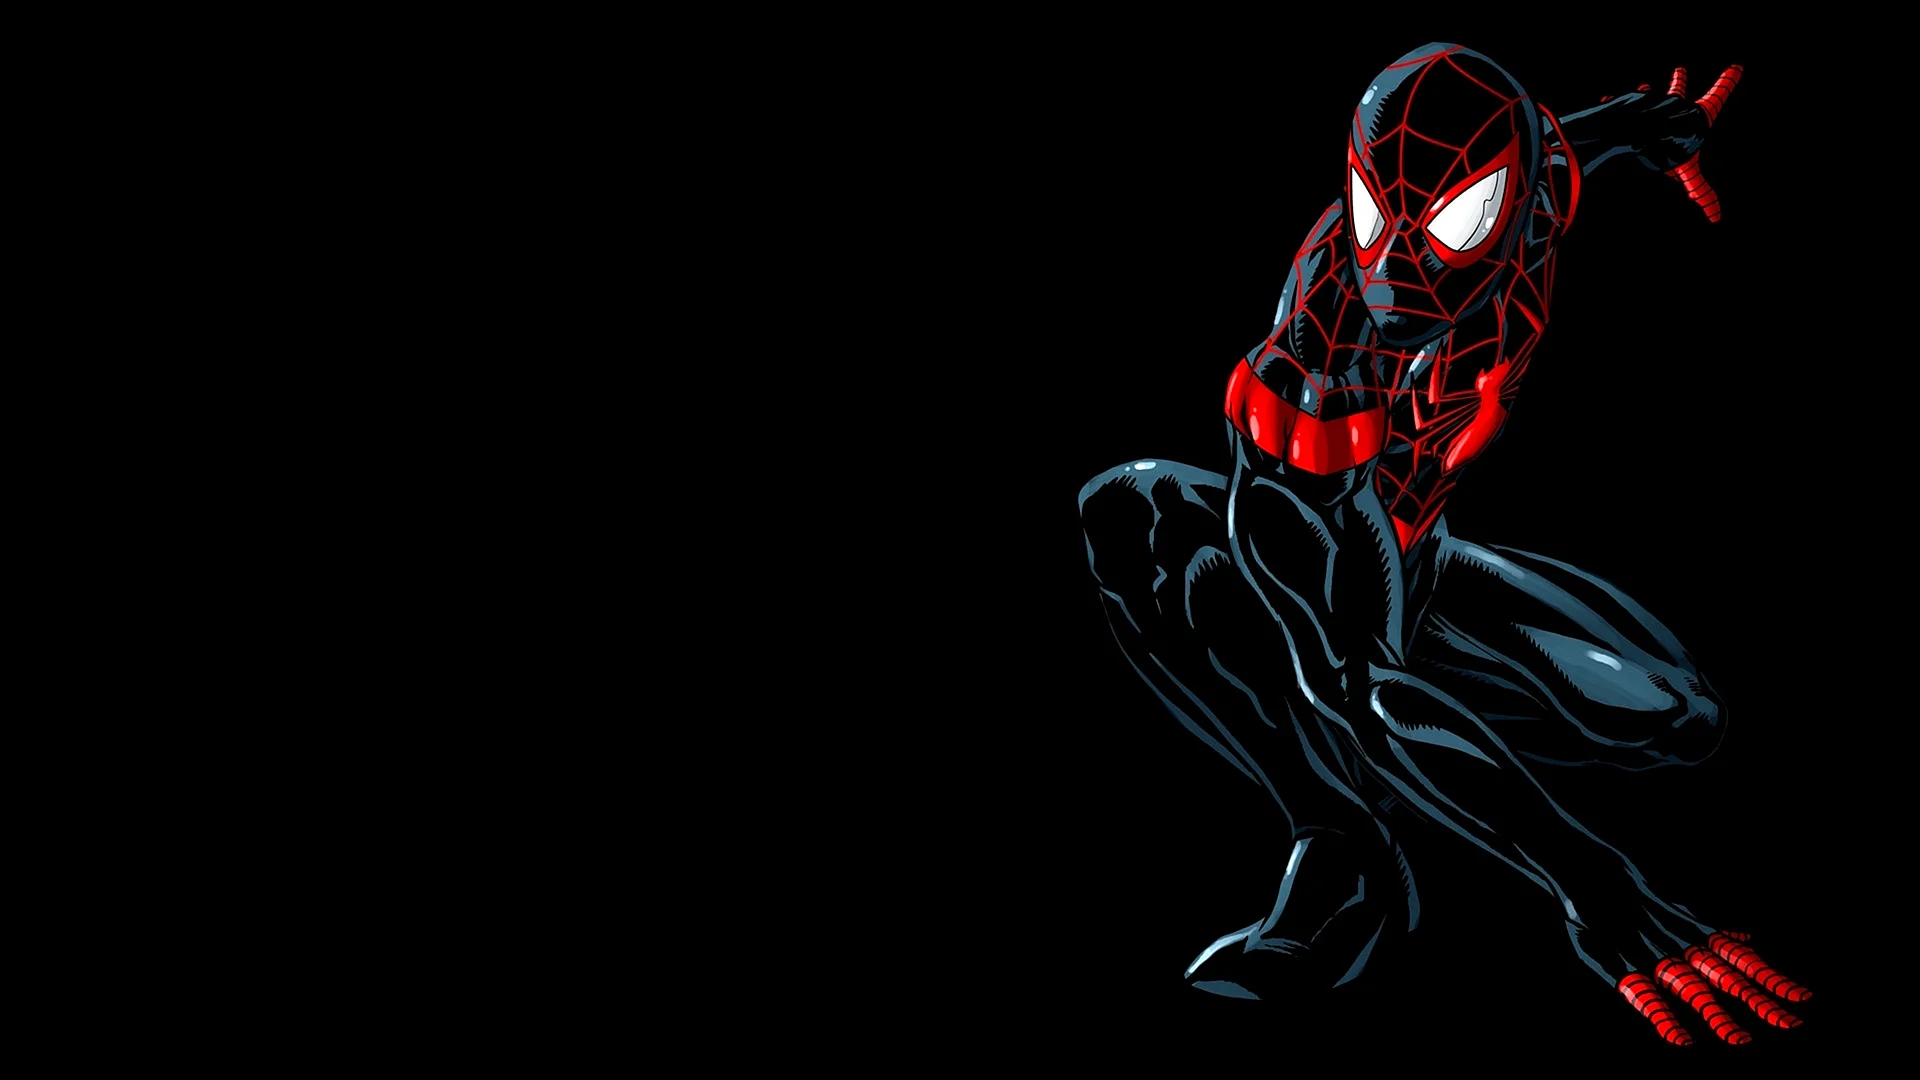 Spiderman Miles Morales Wallpaper